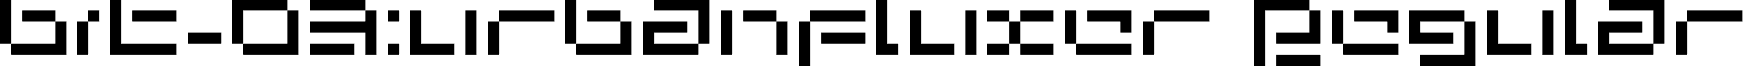 bit-03:urbanfluxer Regular font - bit03.ttf